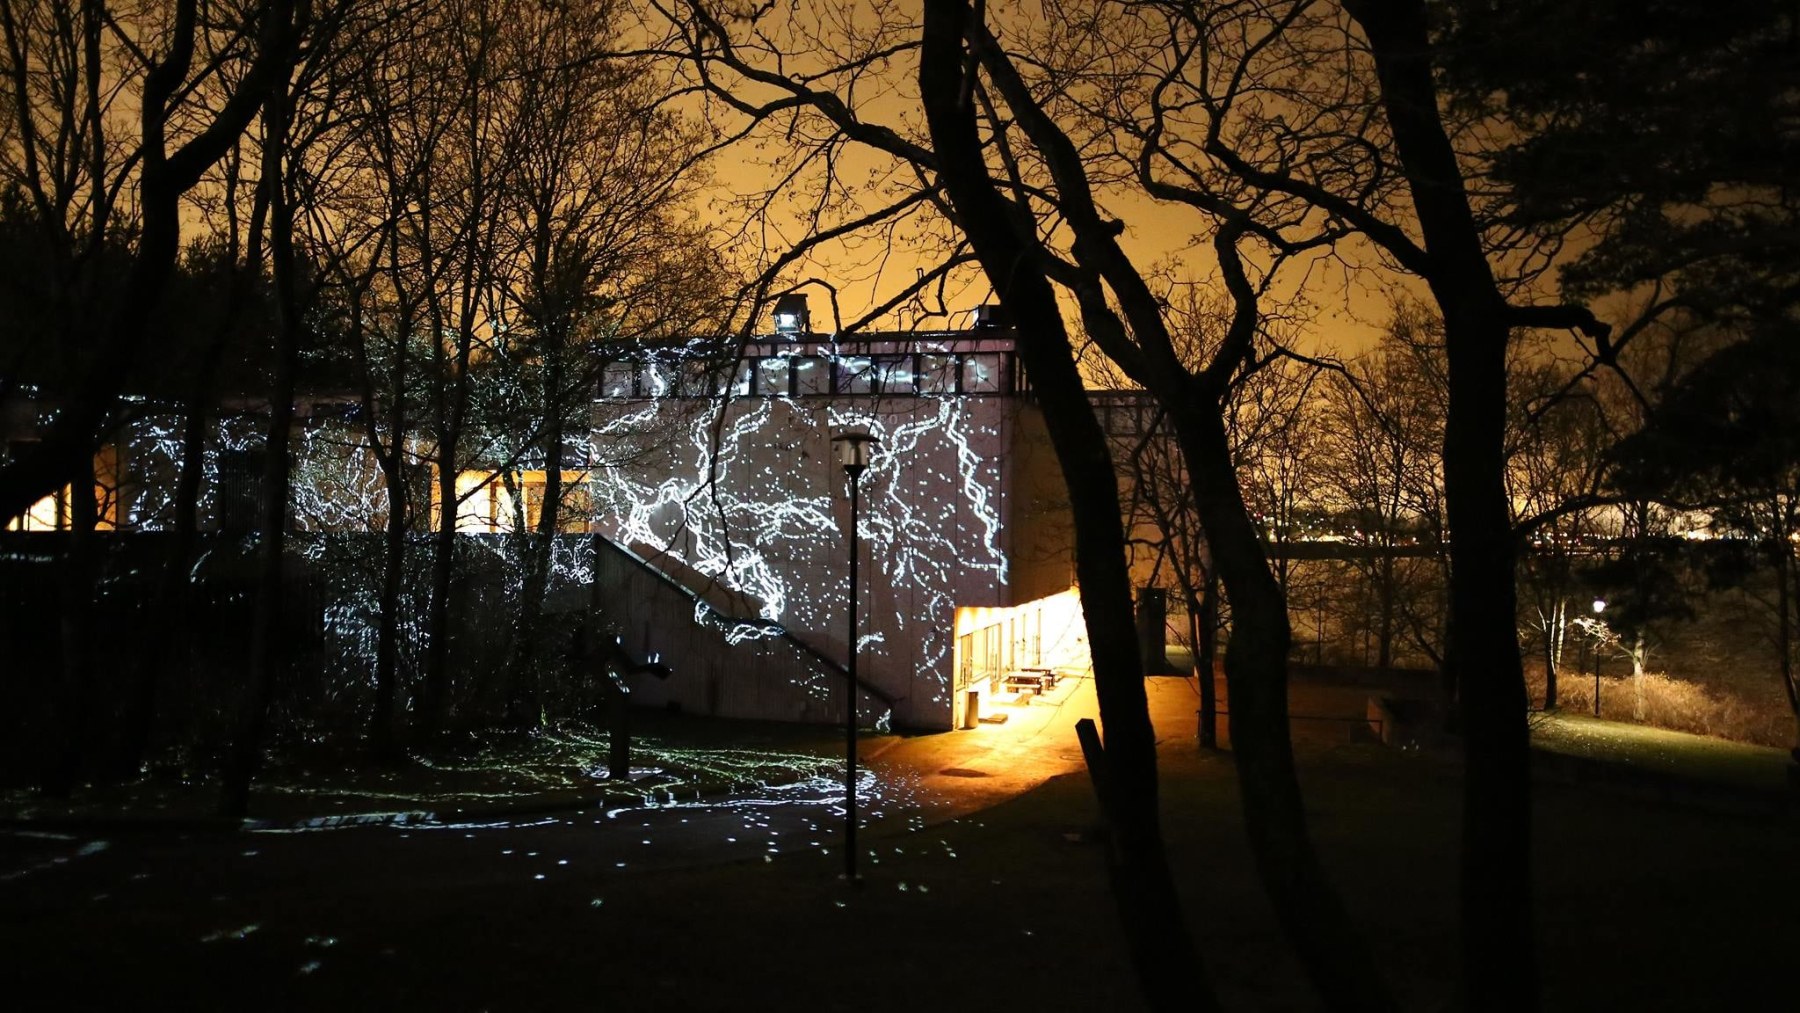 Charles Sandison's installation The Nature of Light illuminates the Sara Hild&eacute;n Art Museum